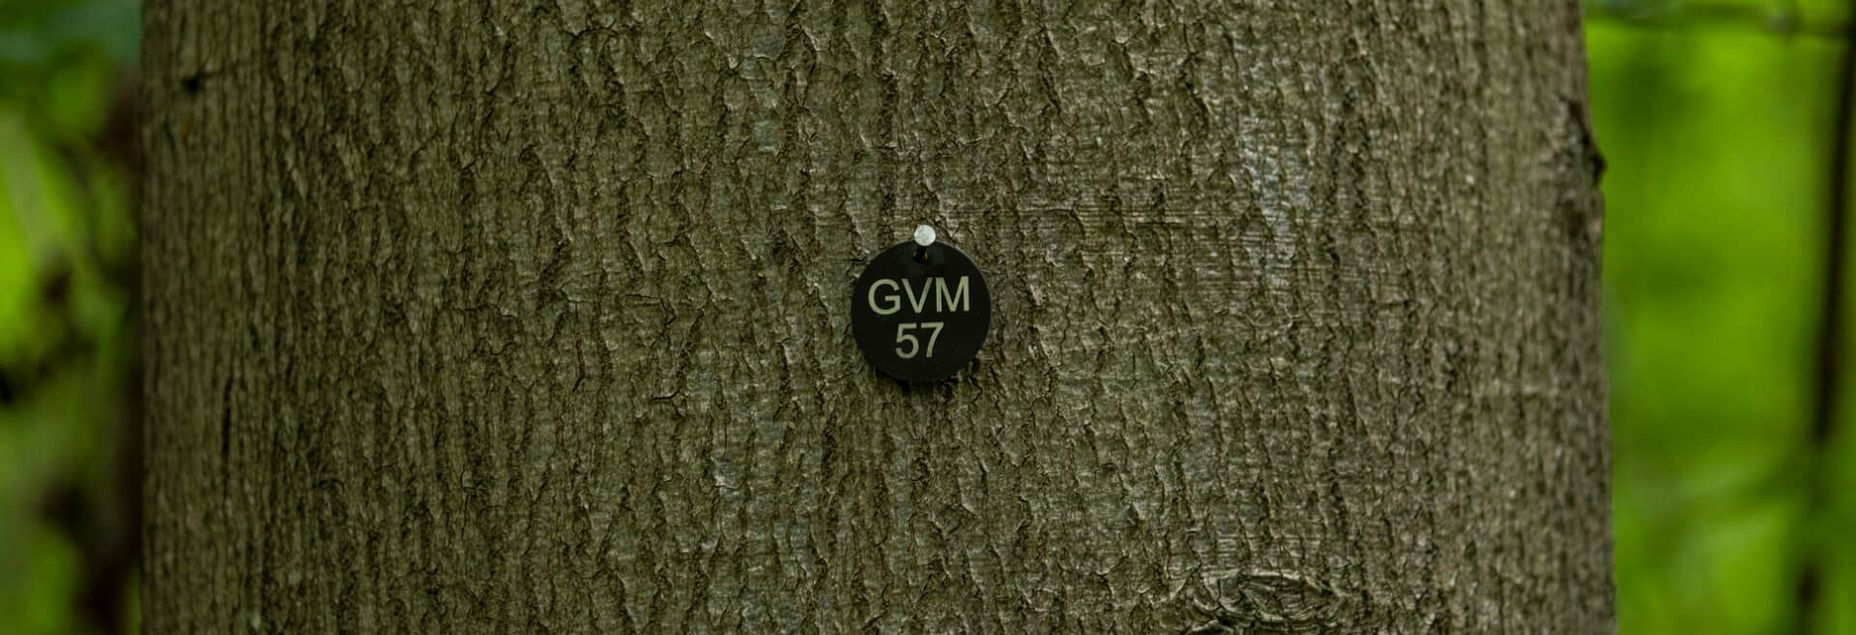 Baum GVM 57 - Plakette